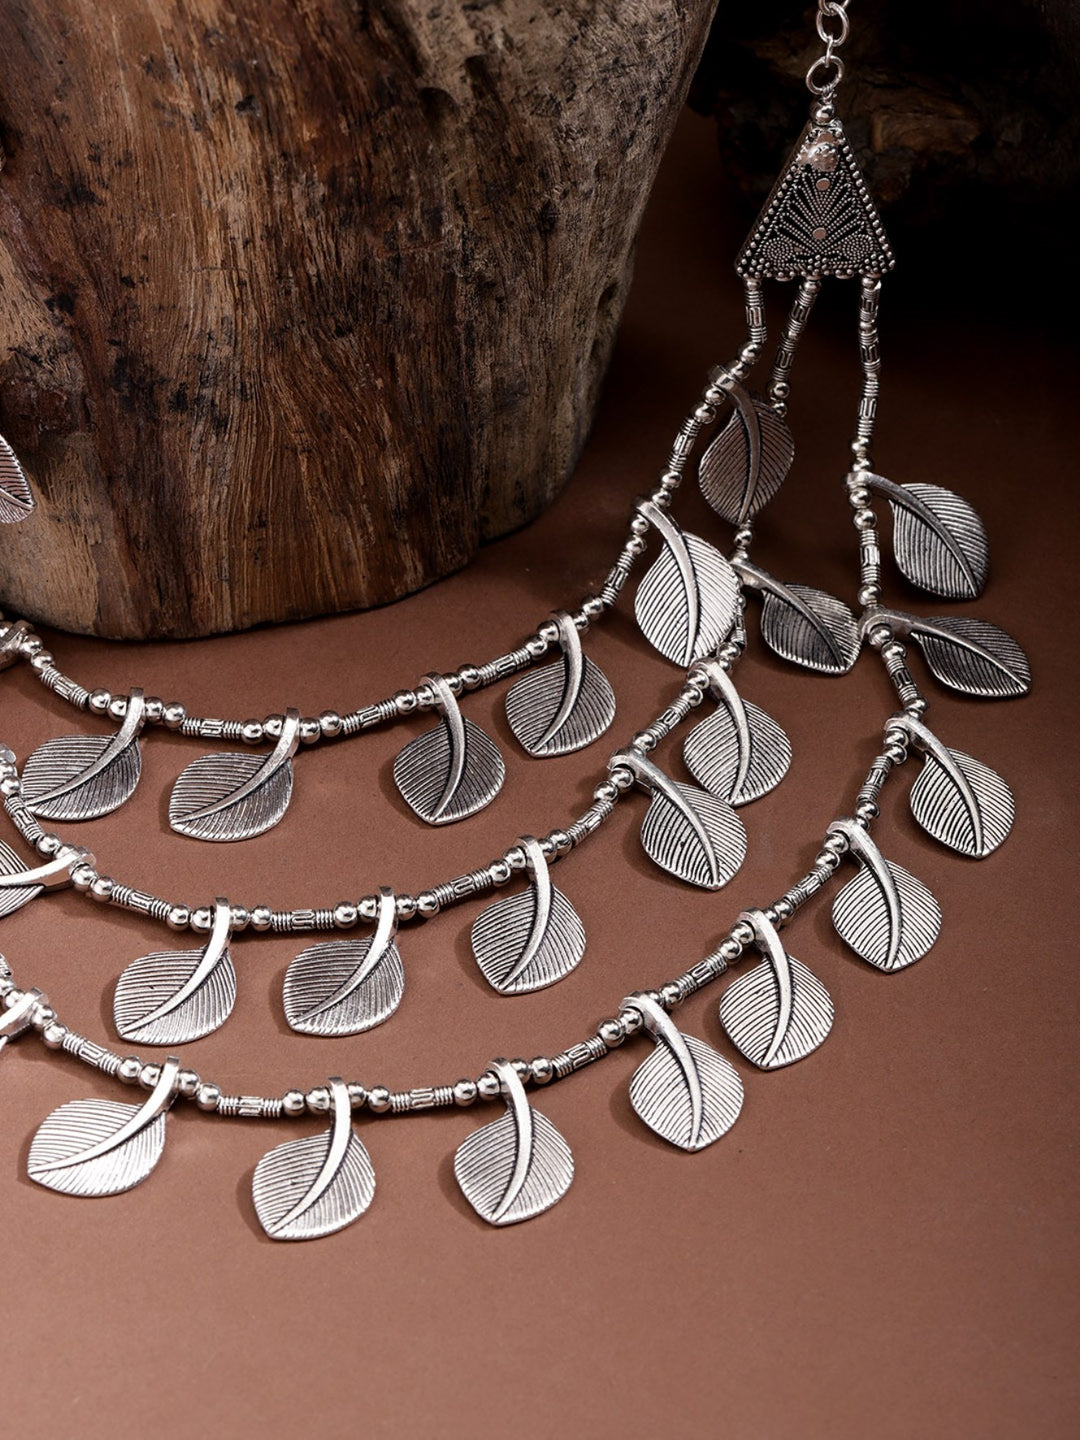 German Silver Oxidised Leaf Necklace